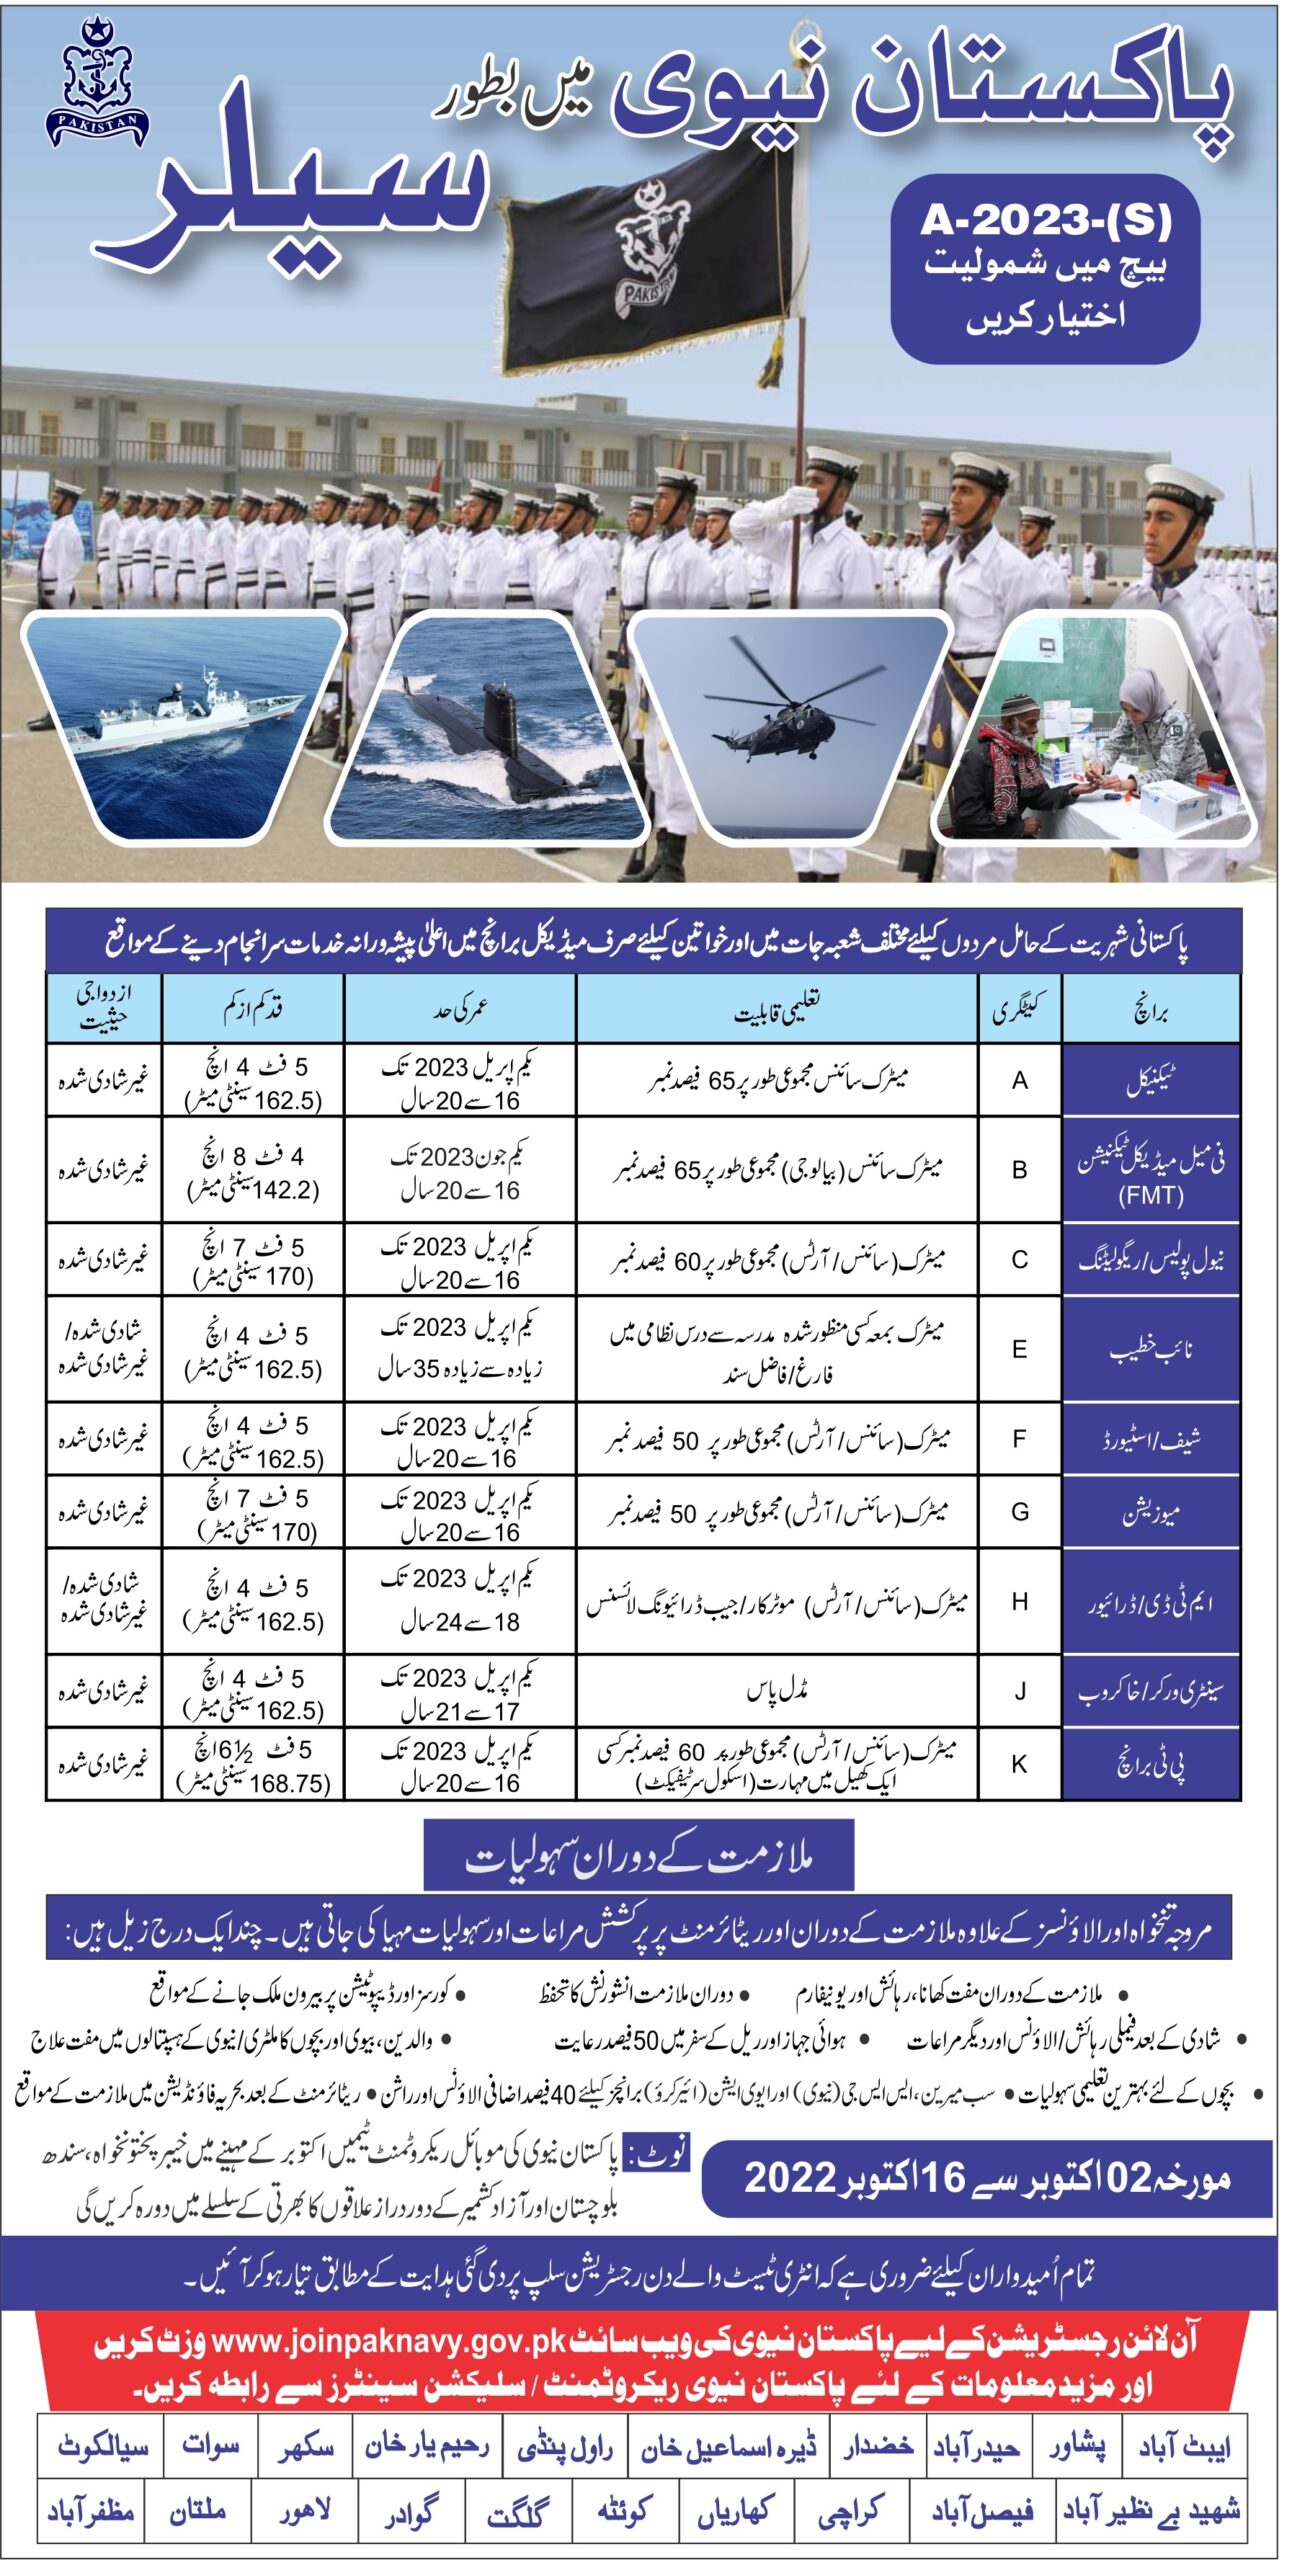 Join Pak Navy Sailor - Join Pakistan Navy 2022 - Join Pakistan Navy as Sailor Batch A-2023(S) - Pak Navy Jobs 2022 Online Registration - www.joinpaknavy.gov.pk 2022 online registration